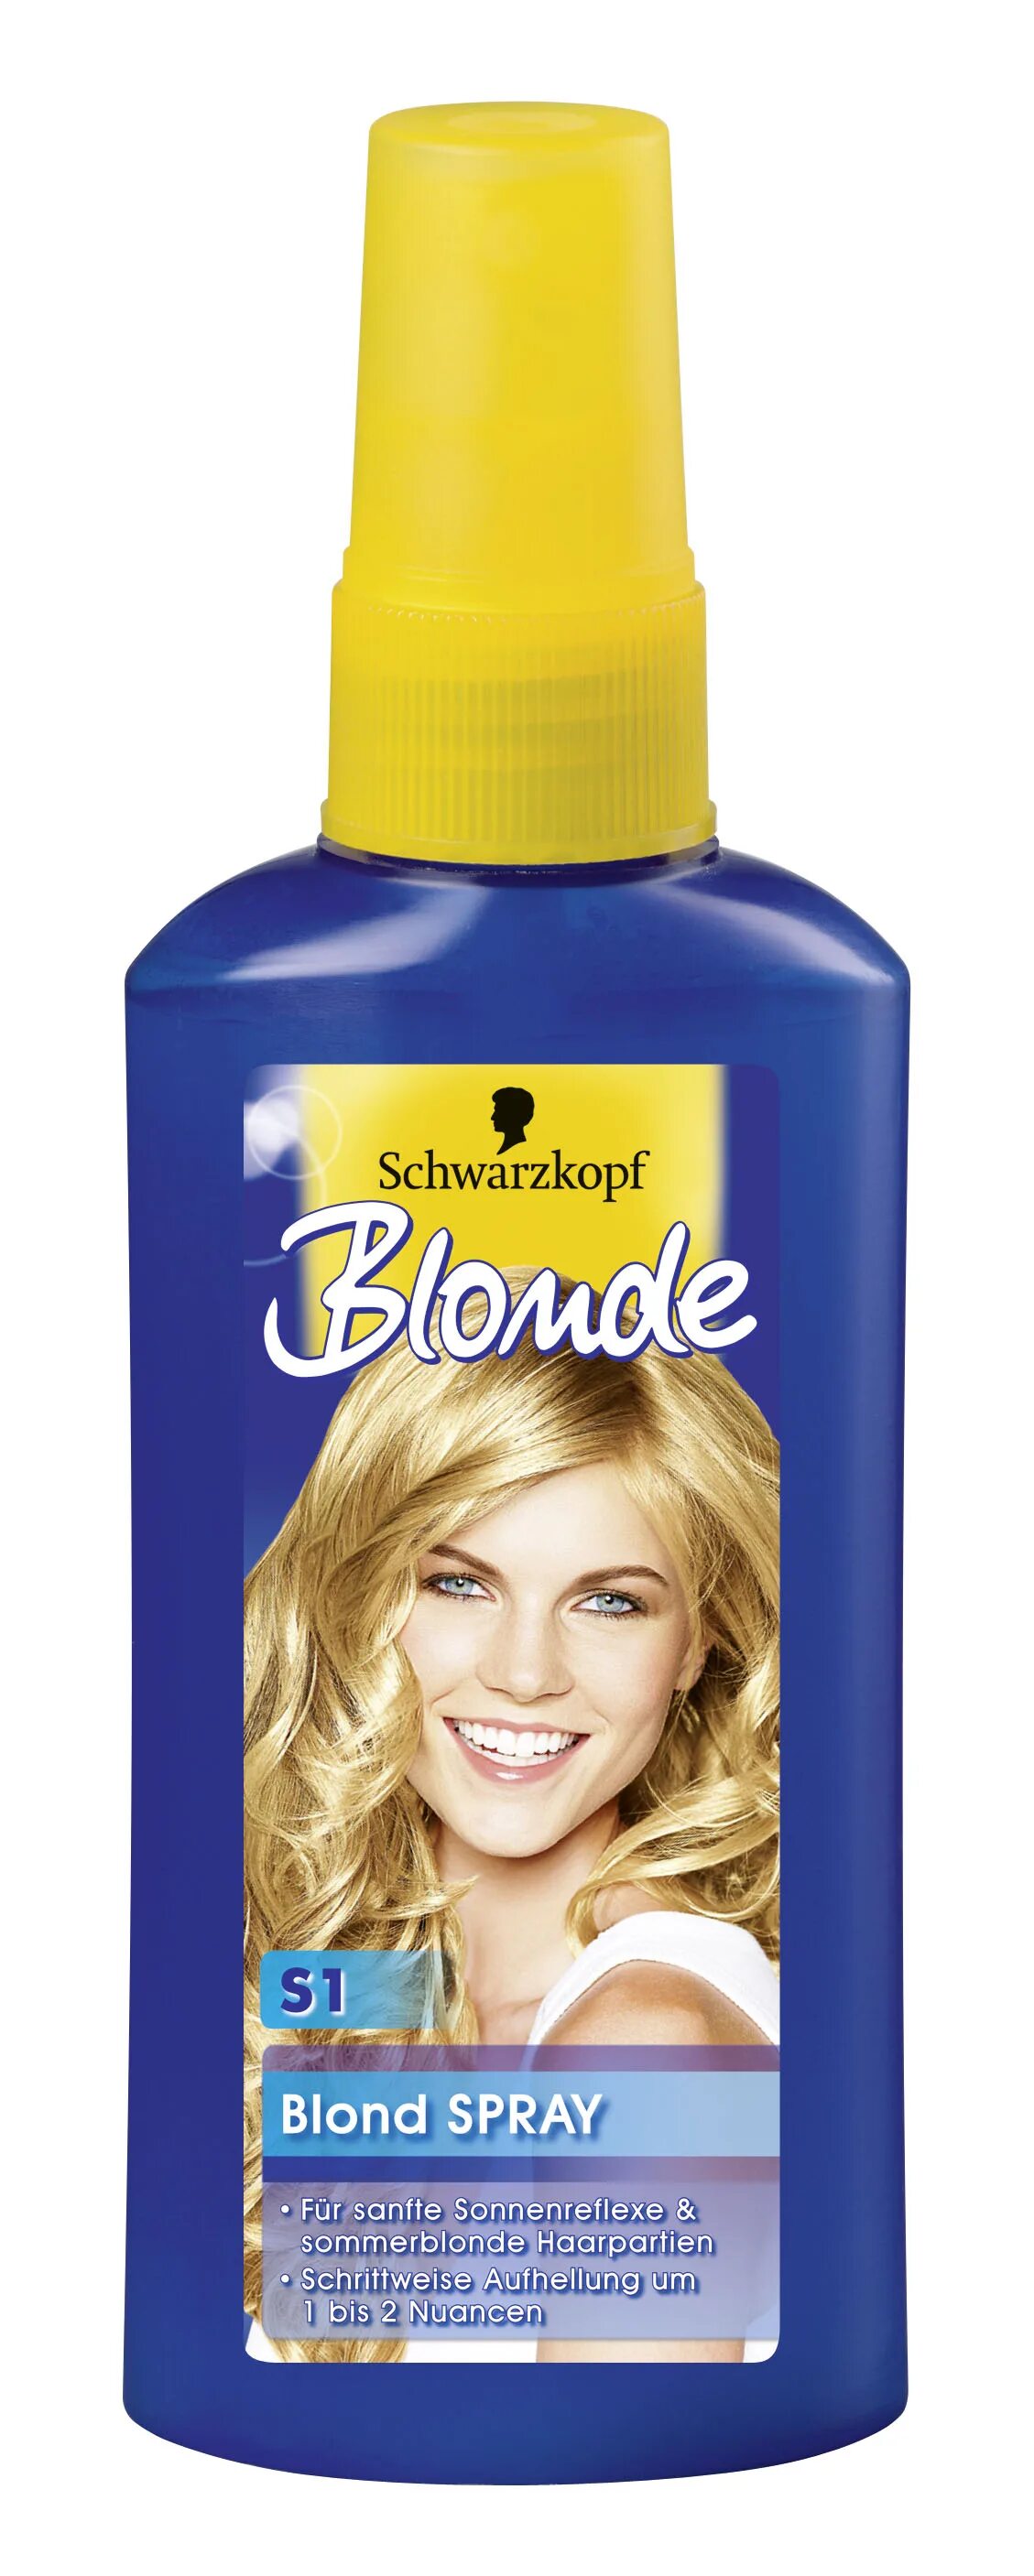 Schwarzkopf Nordic blonde спрей. Осветляющий спрей шварцкопф blonde. Осветляющий спрей для волос Schwarzkopf blonde. Осветляющий спрей Nordic.